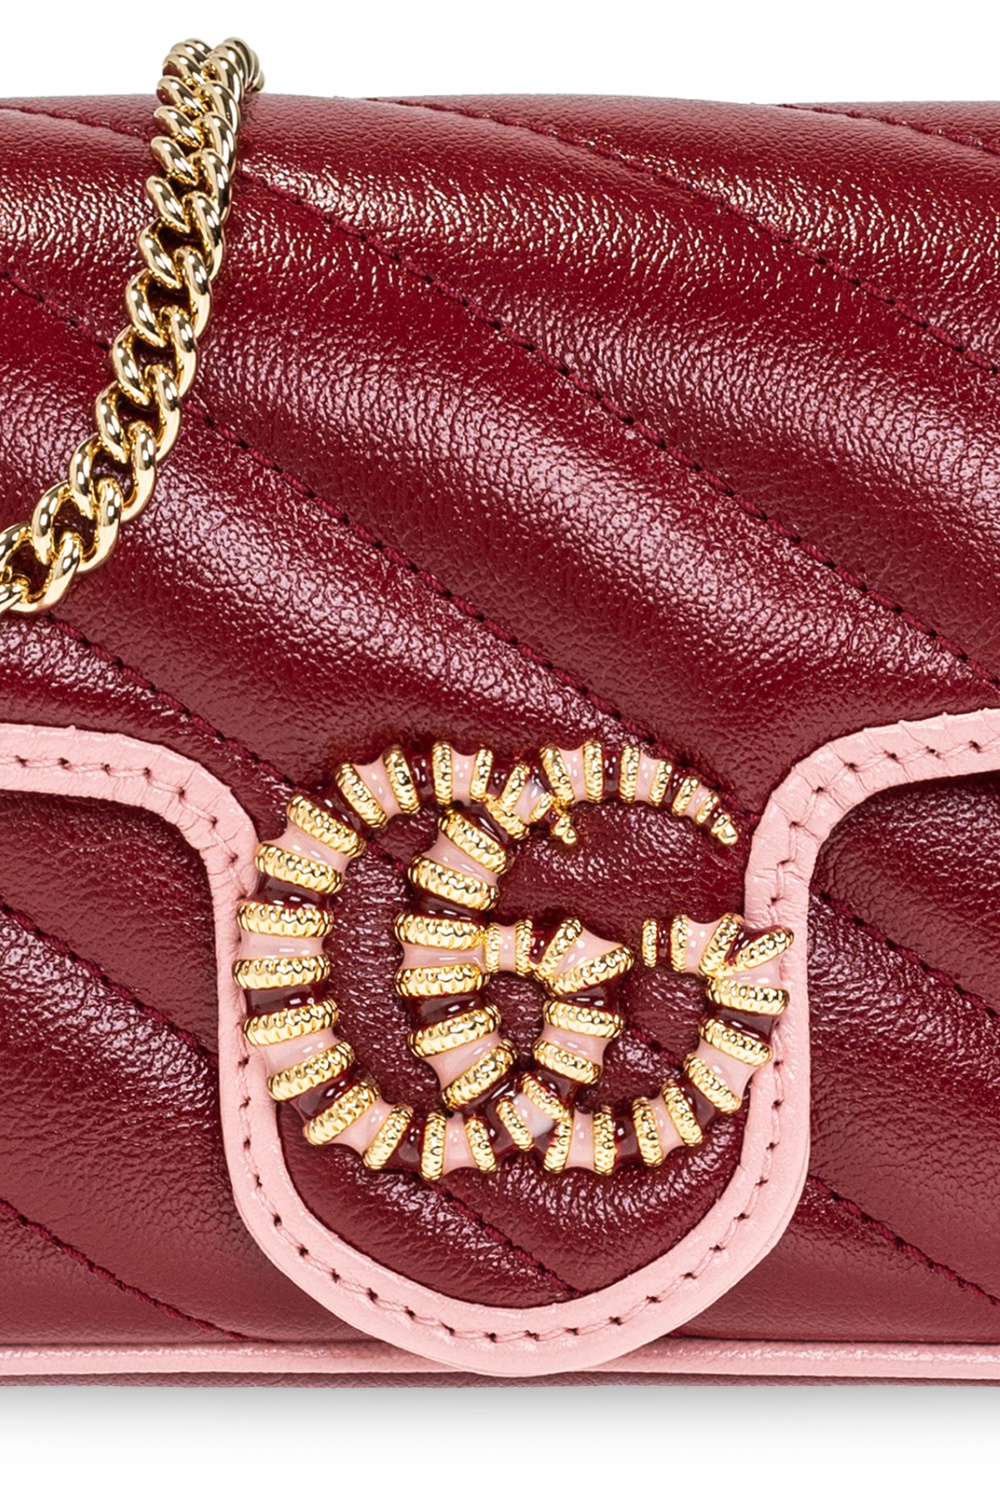 GG Marmont Super Mini Shoulder Bag in Pink - Gucci